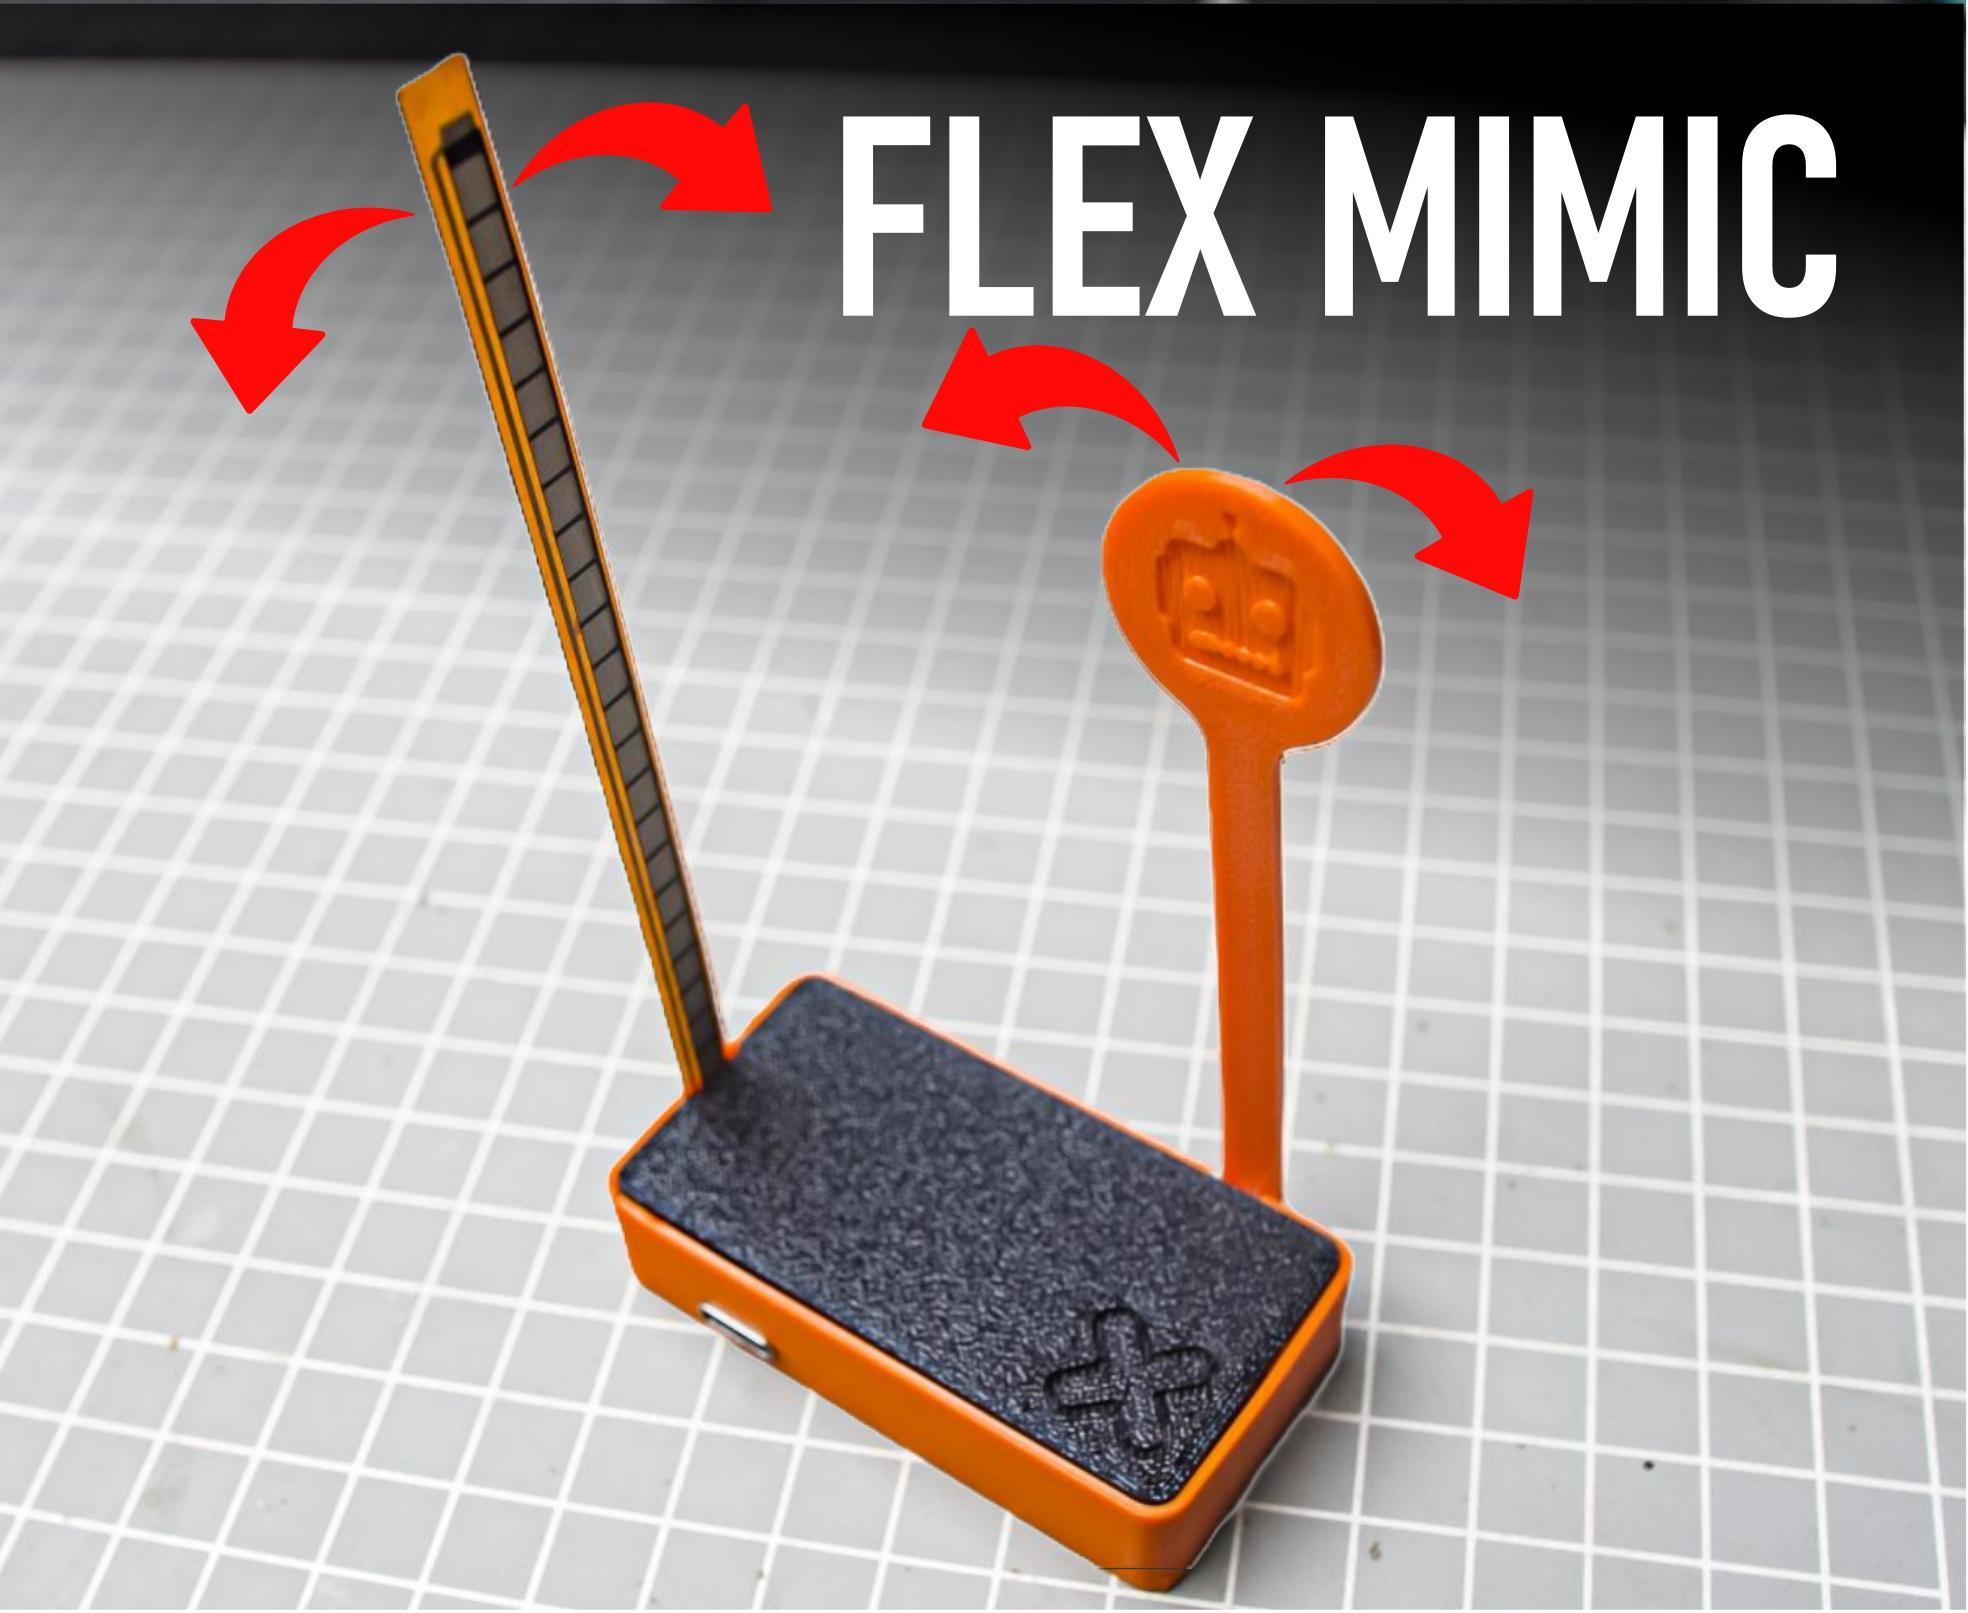 Mimicking the Motion of Flex Senser With a Servo